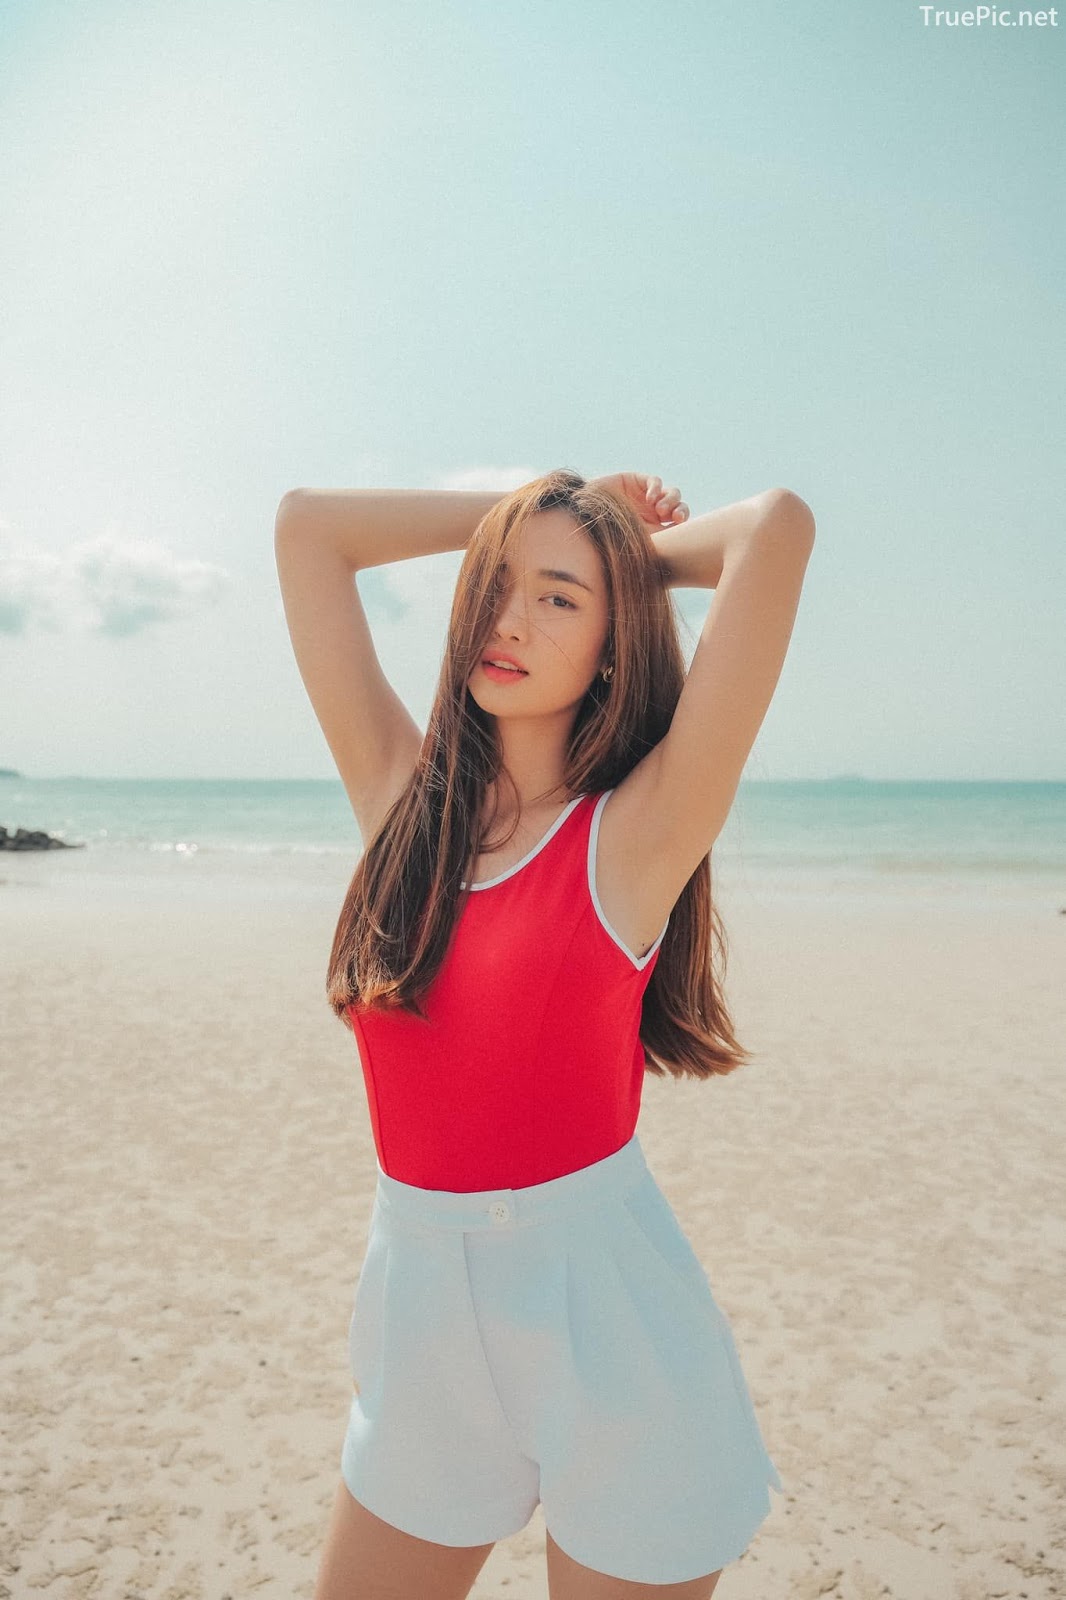 Miss Teen Thailand - Kanyarat Ruangrung - The Red Monokini On The Beach - TruePic.net - Picture 19